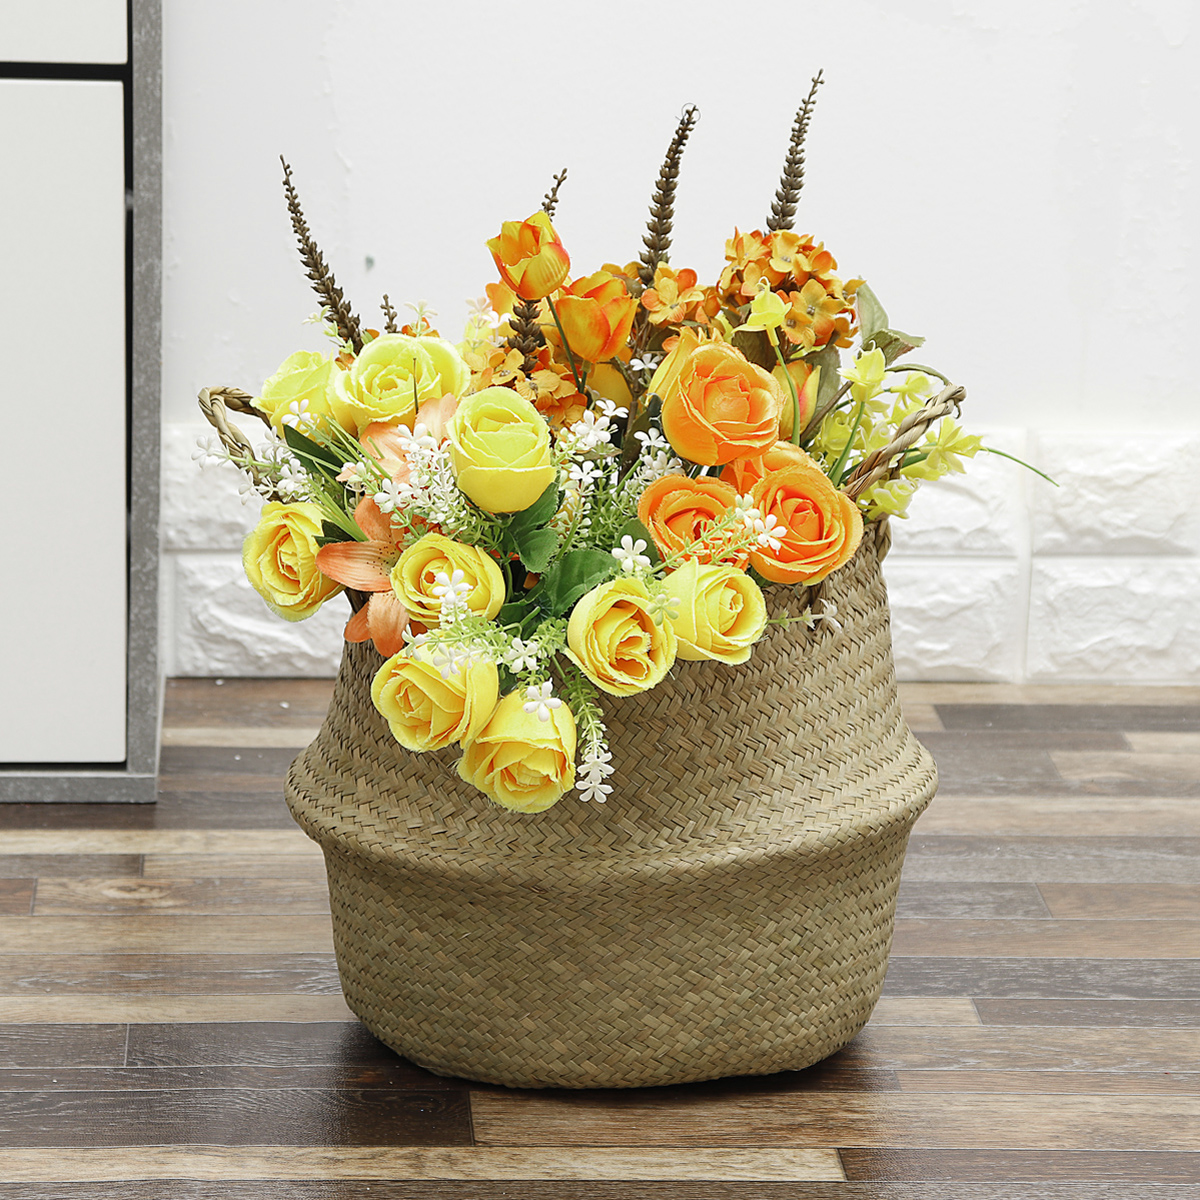 Folding Seagrass Storage Basket Home Decorative Rattan Plant Flower Pot Decor Handmade Woven Wicker Belly Toy Laundry Basket